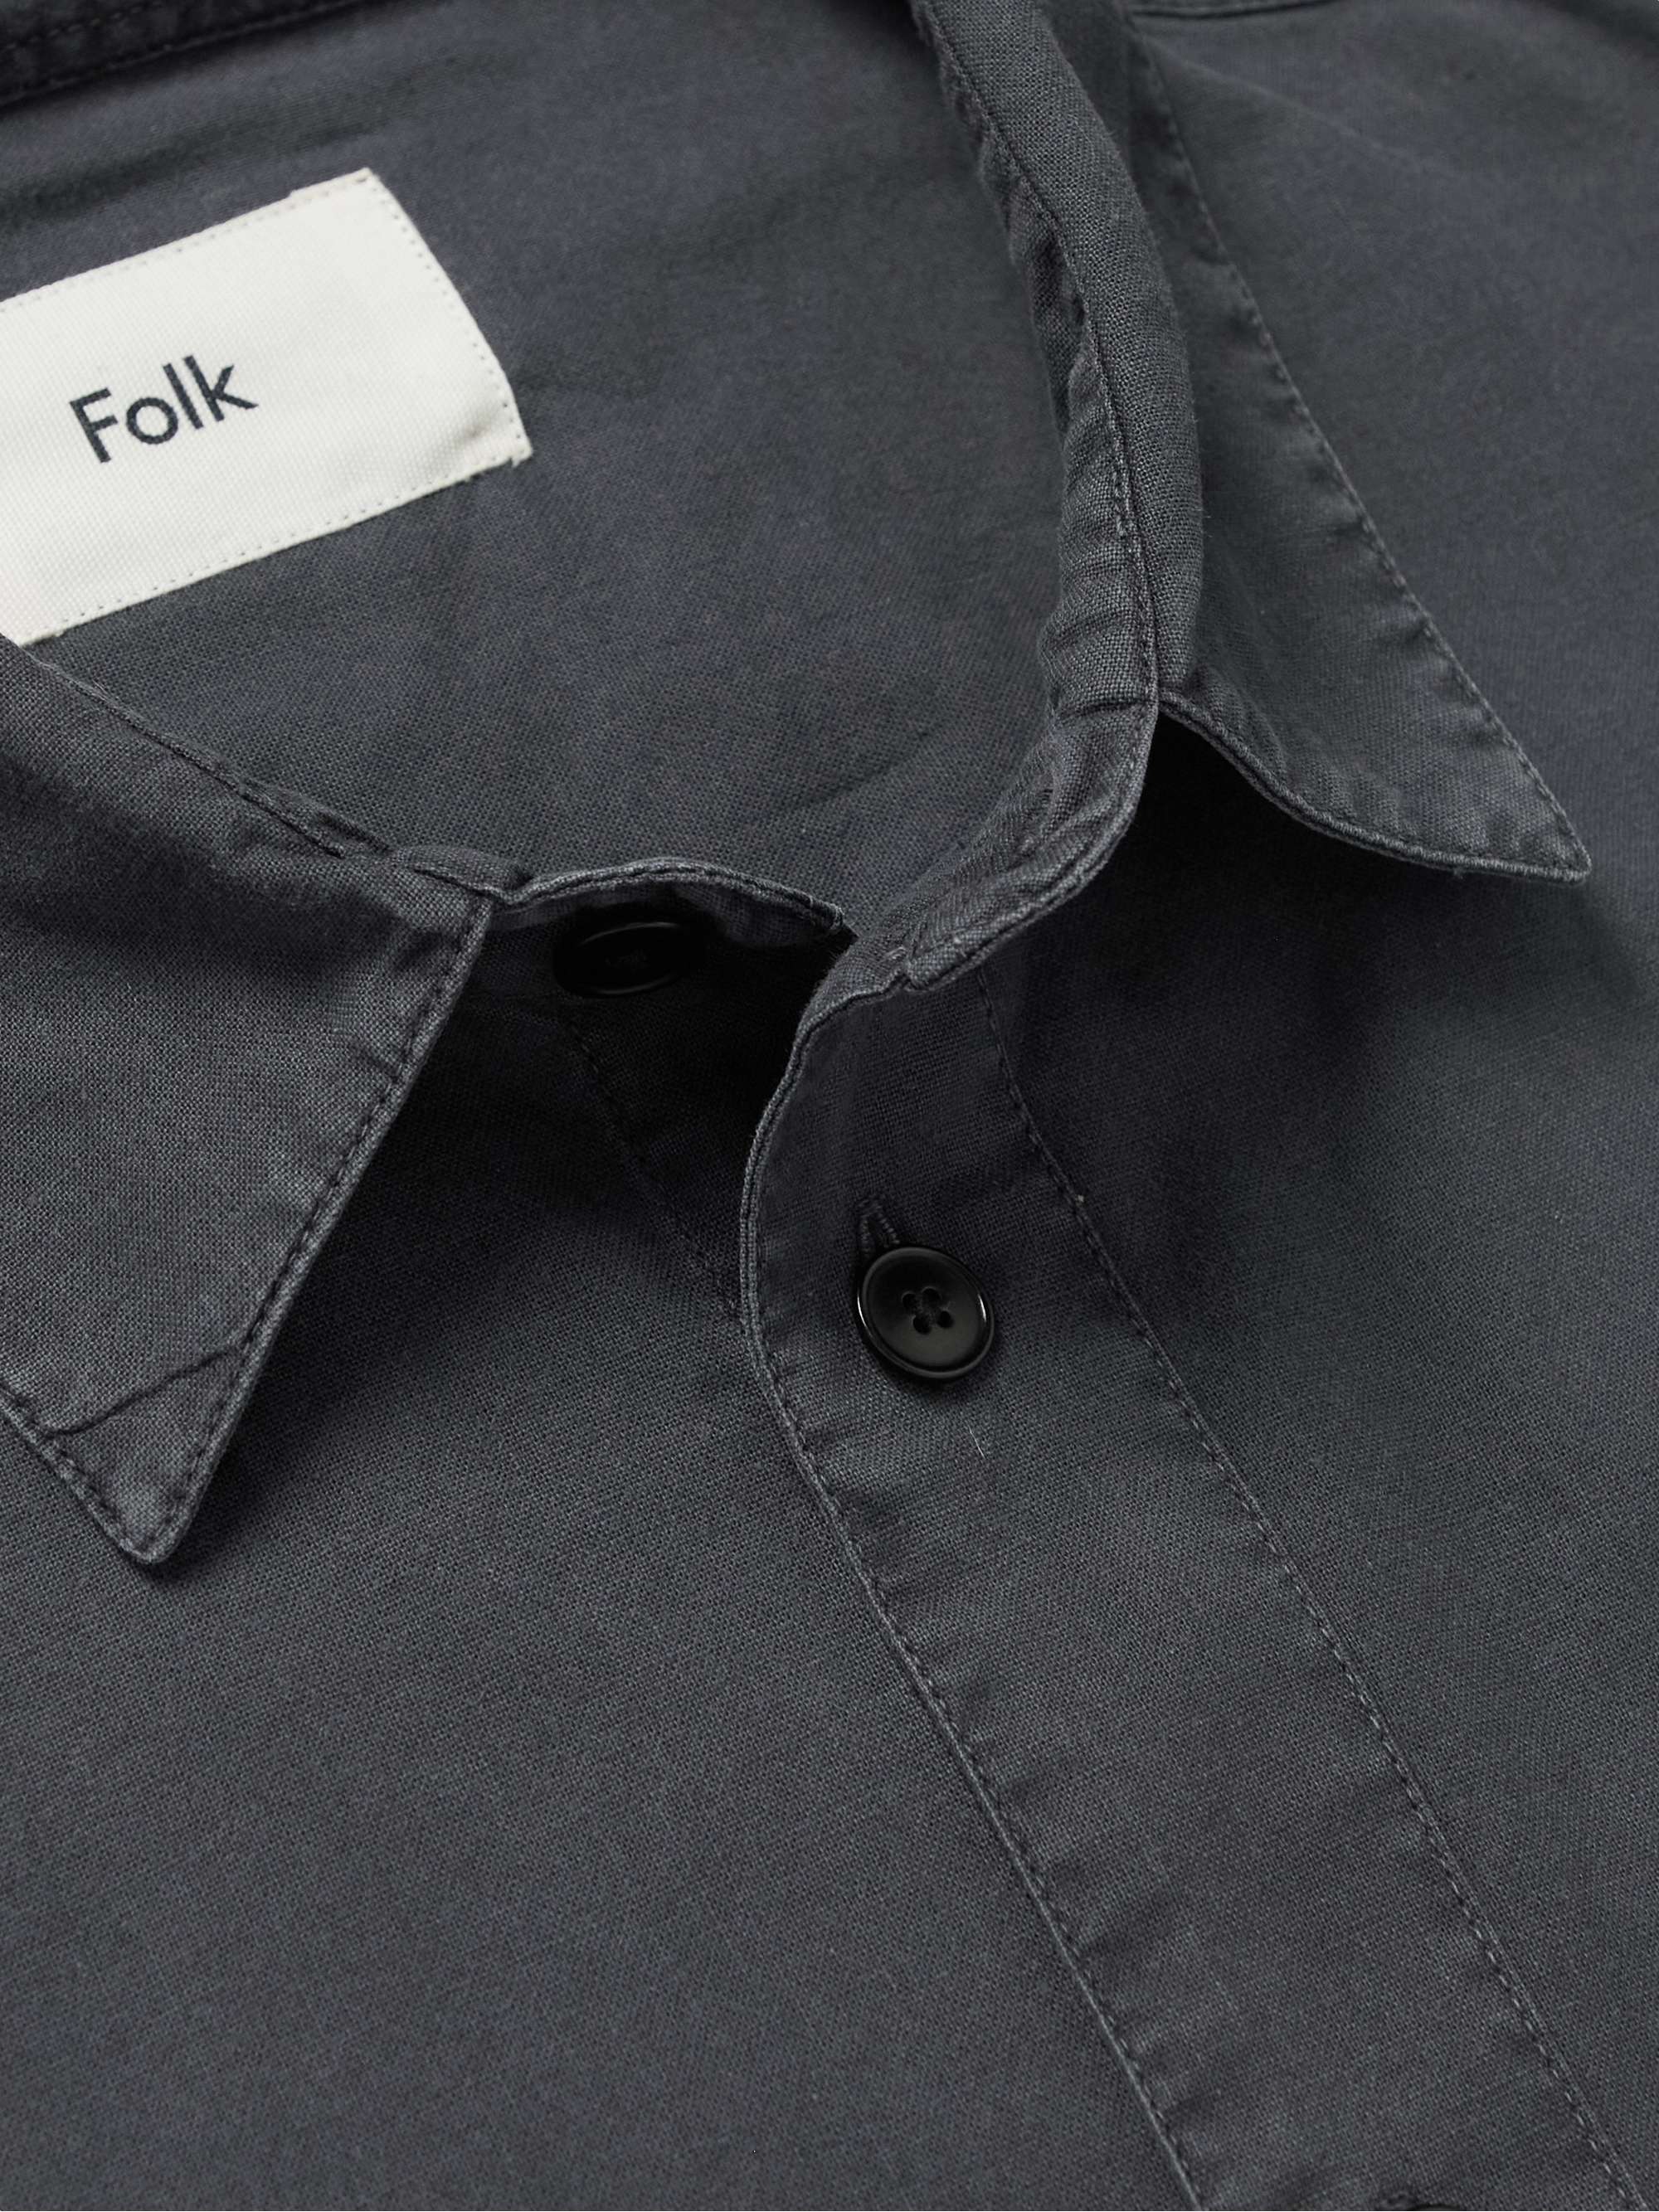 FOLK Stack Cotton Shirt